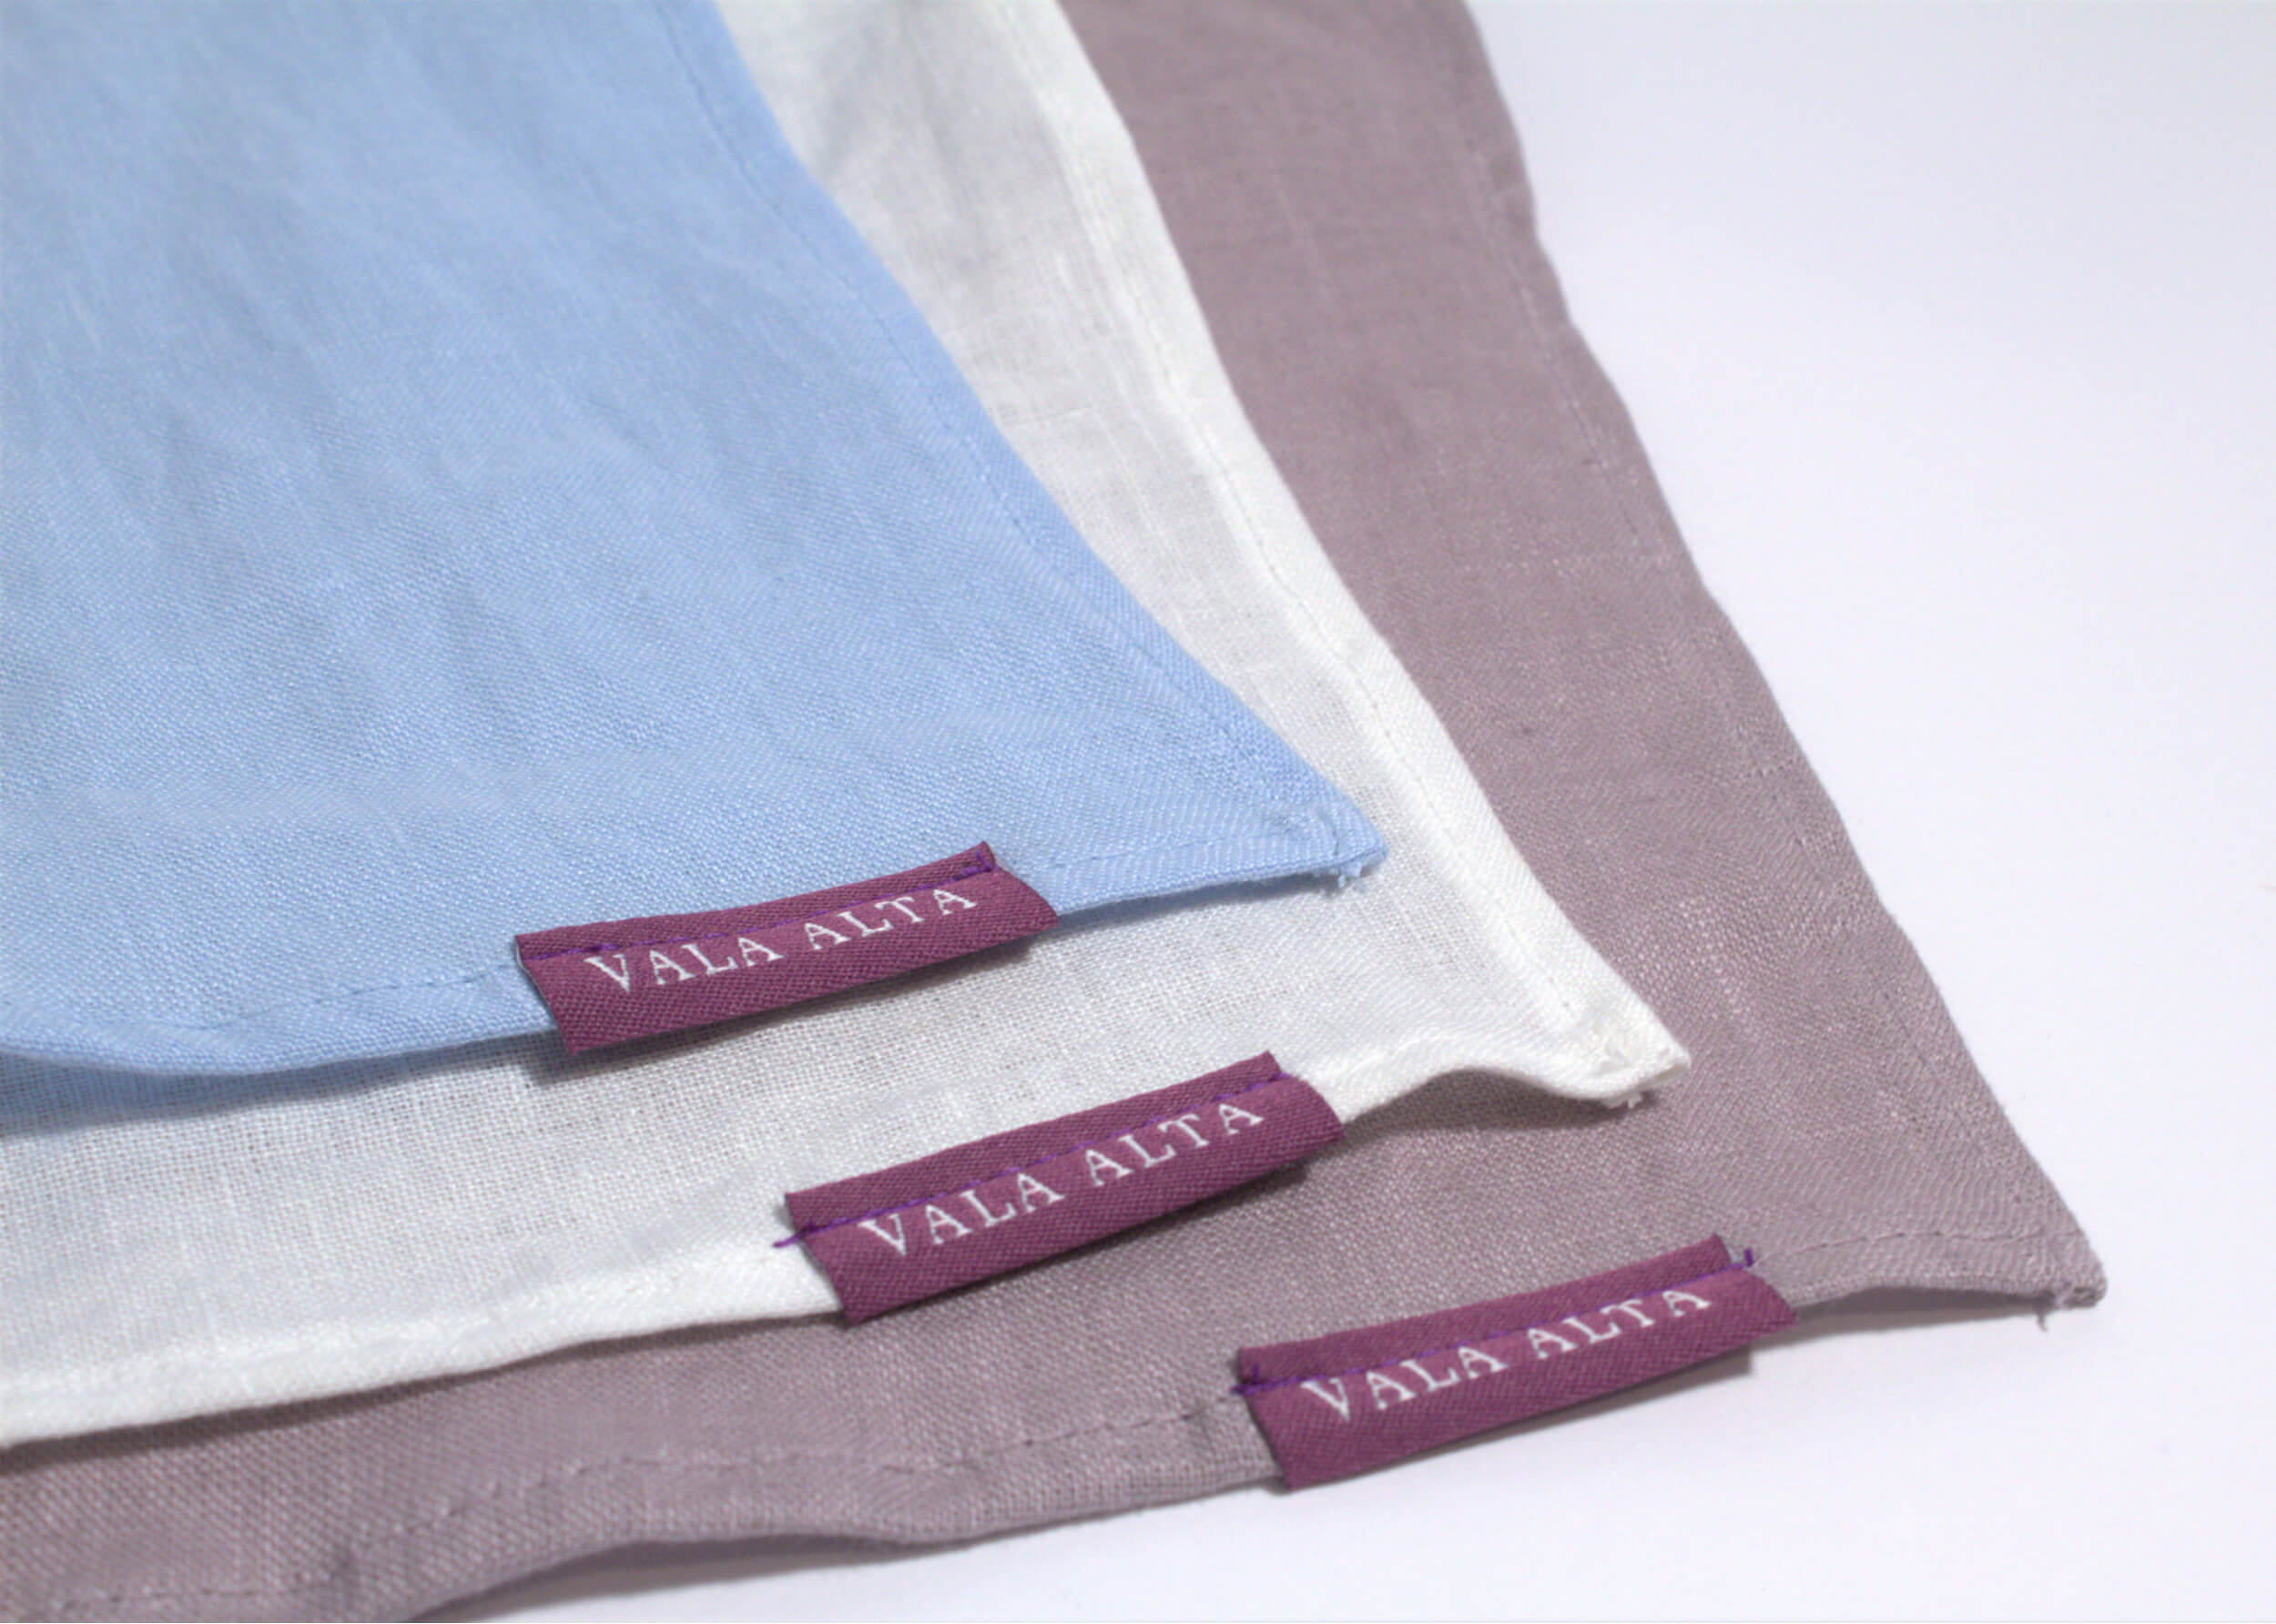 3 Irish Linen Handkerchief Bundle - Product Image